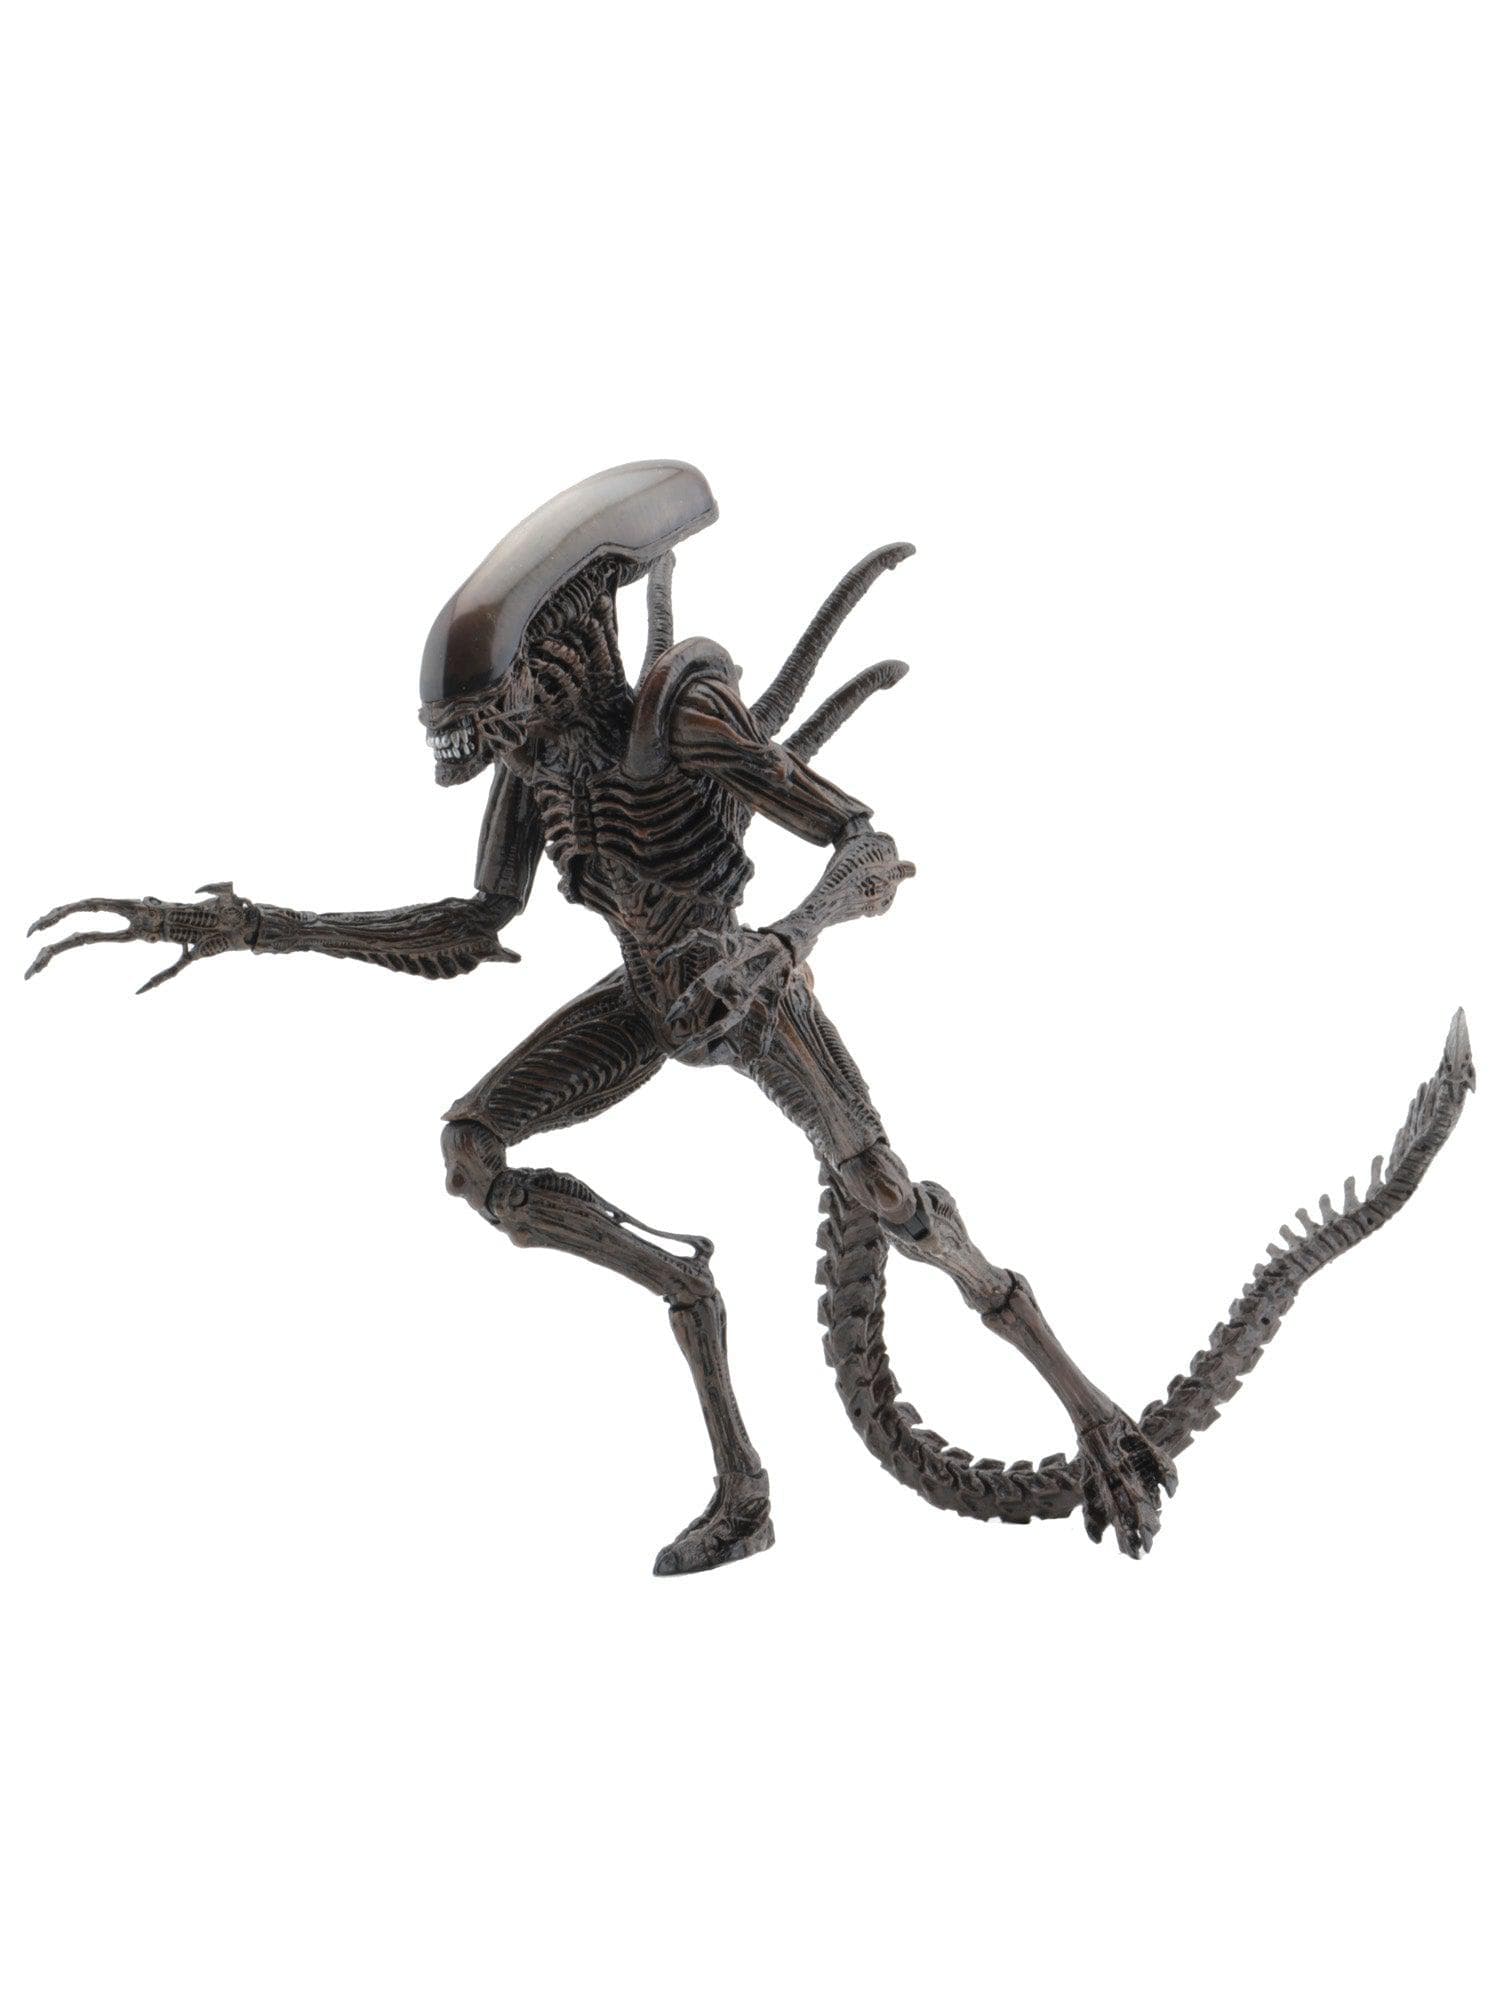 NECA - Aliens - 7" Scale Action Figure - Series 14 Alien Resurrection Warrior - costumes.com